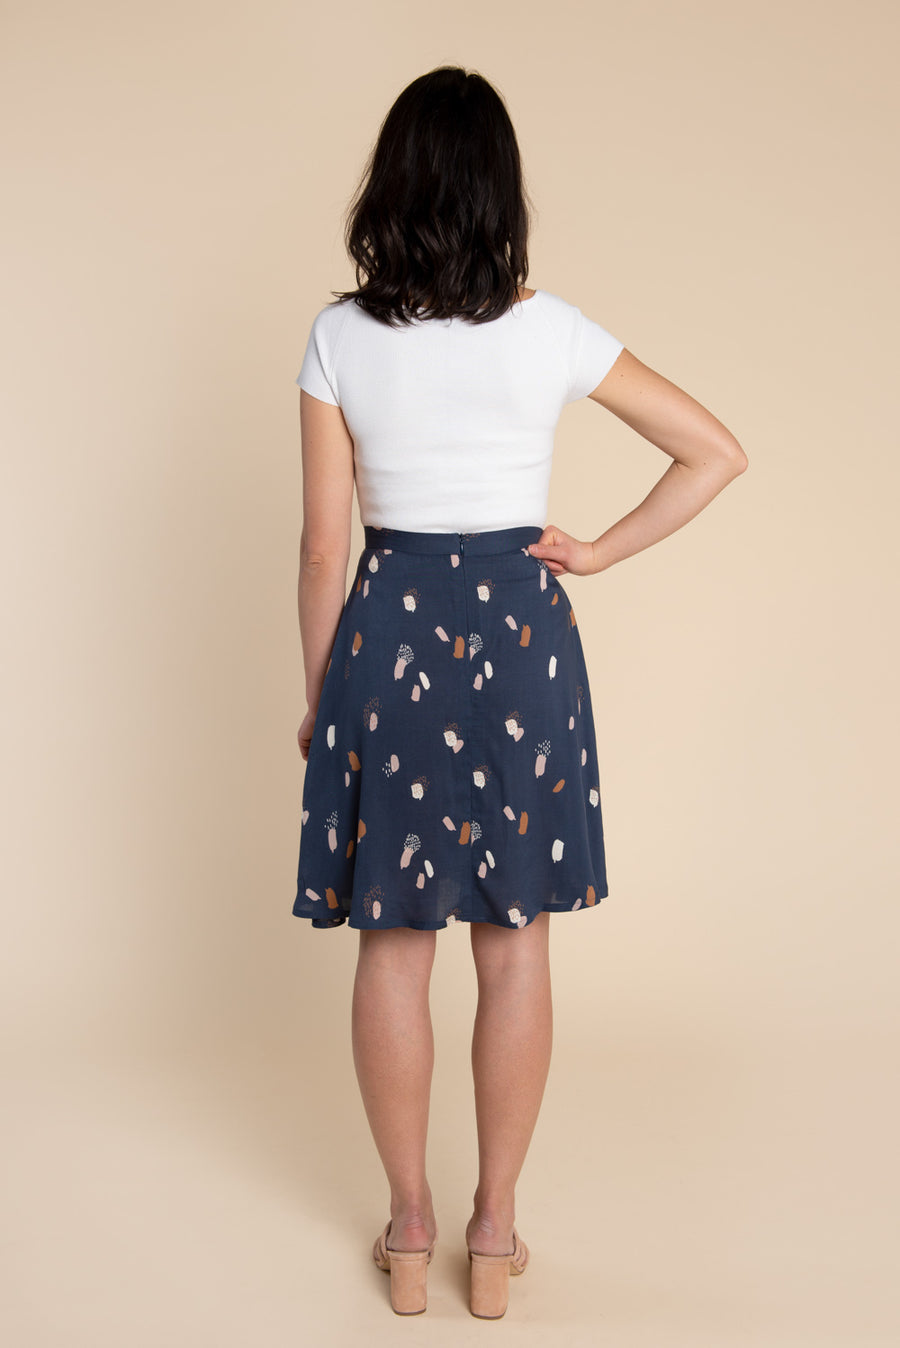 Fiore Skirt Pattern - Flared A-line skirt pattern | Closet Core Patterns